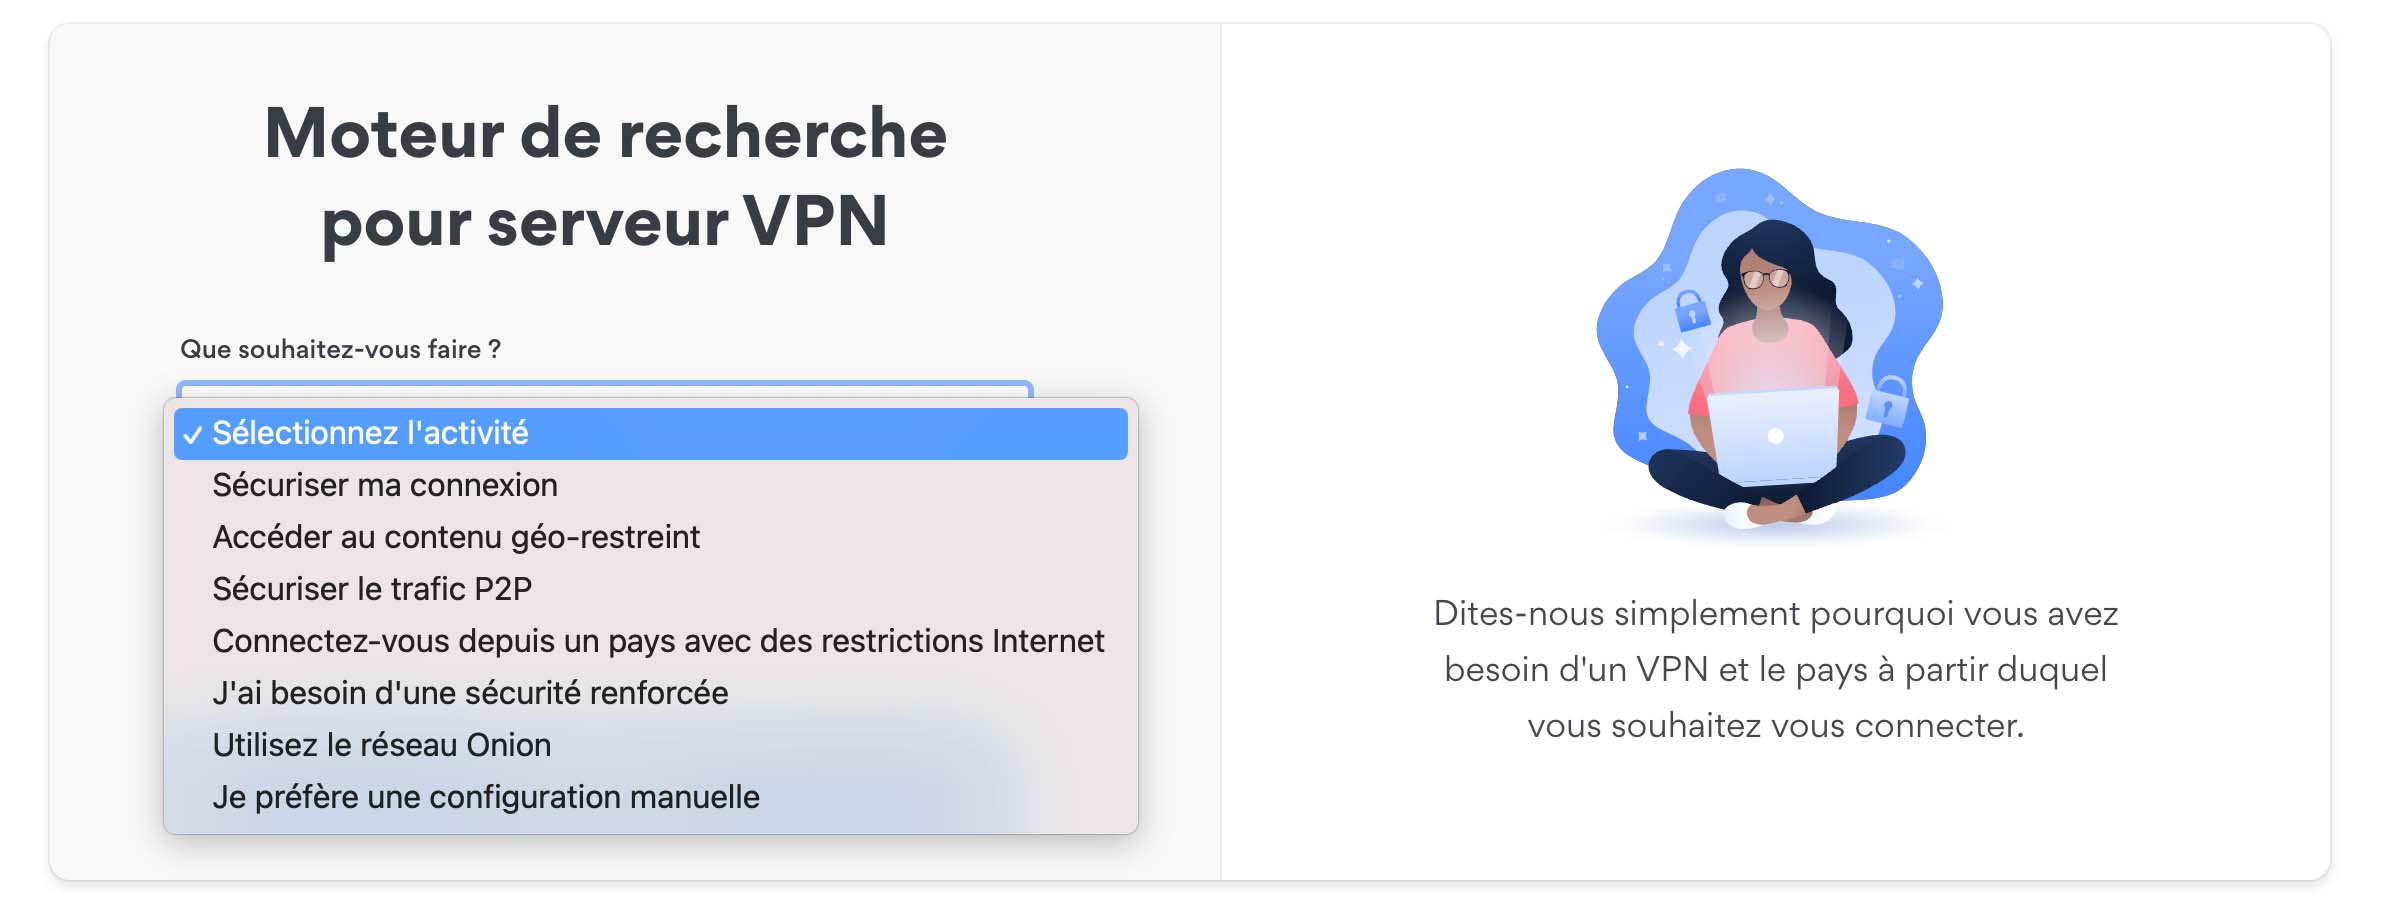 Usefulness of a VPN